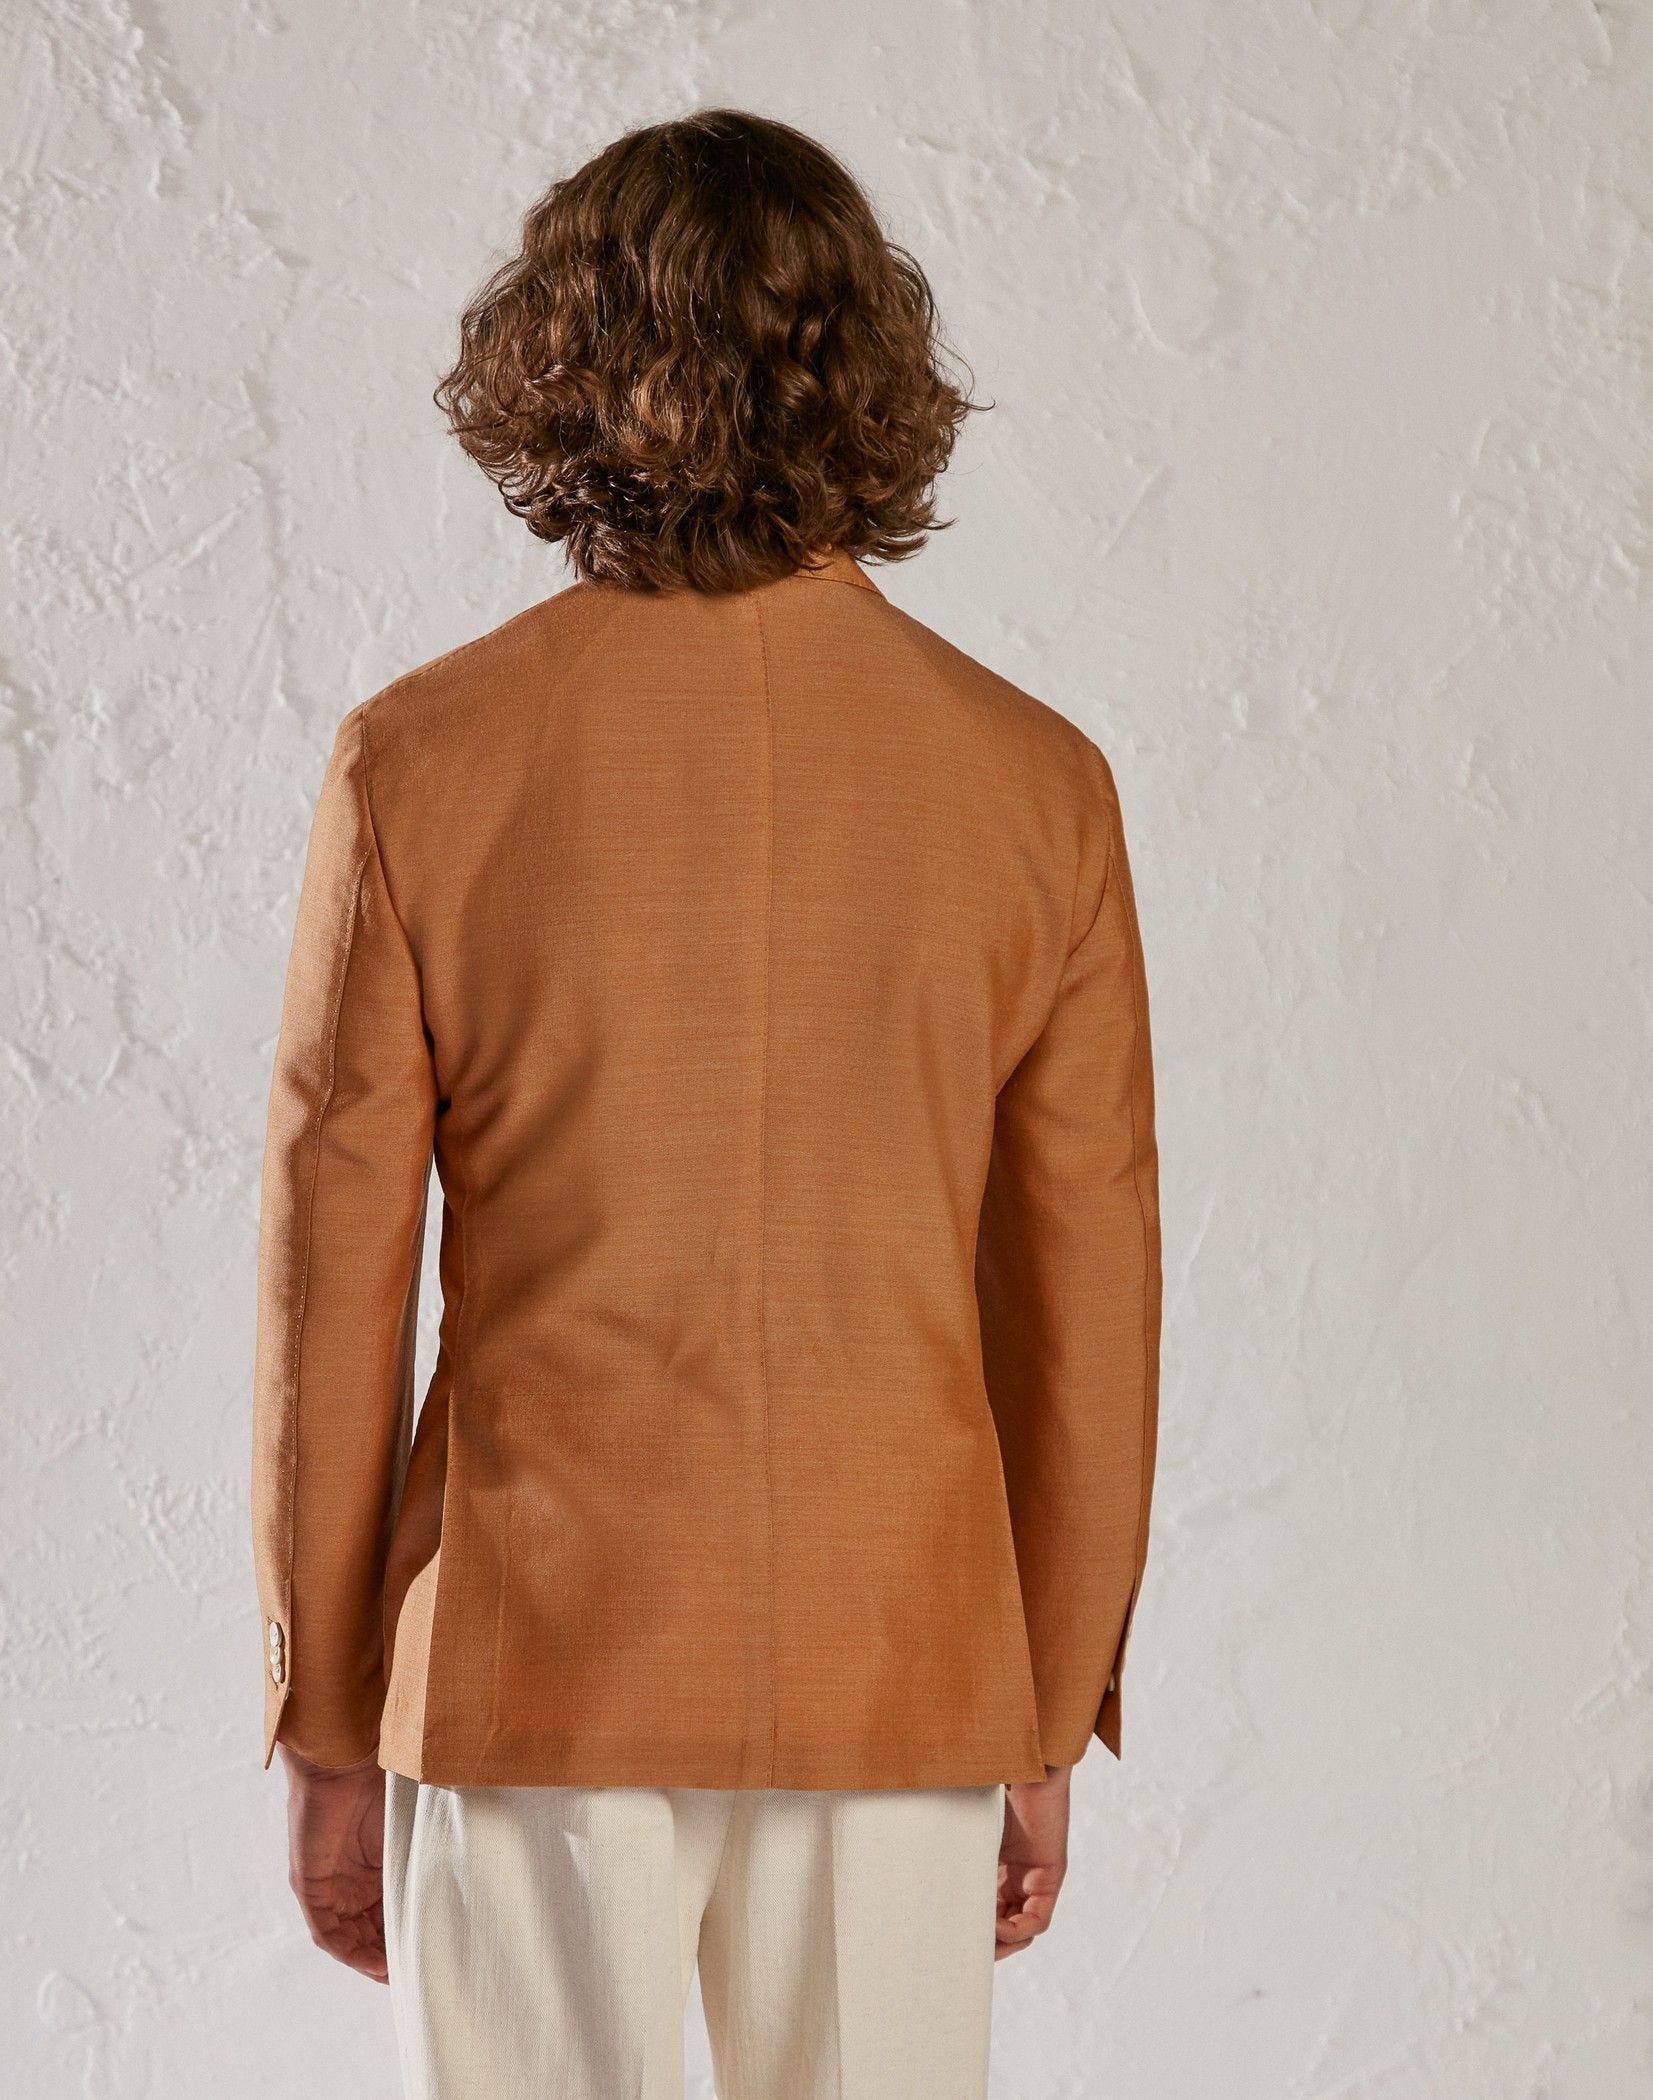 Orange tencel wool jacket - Supersoft